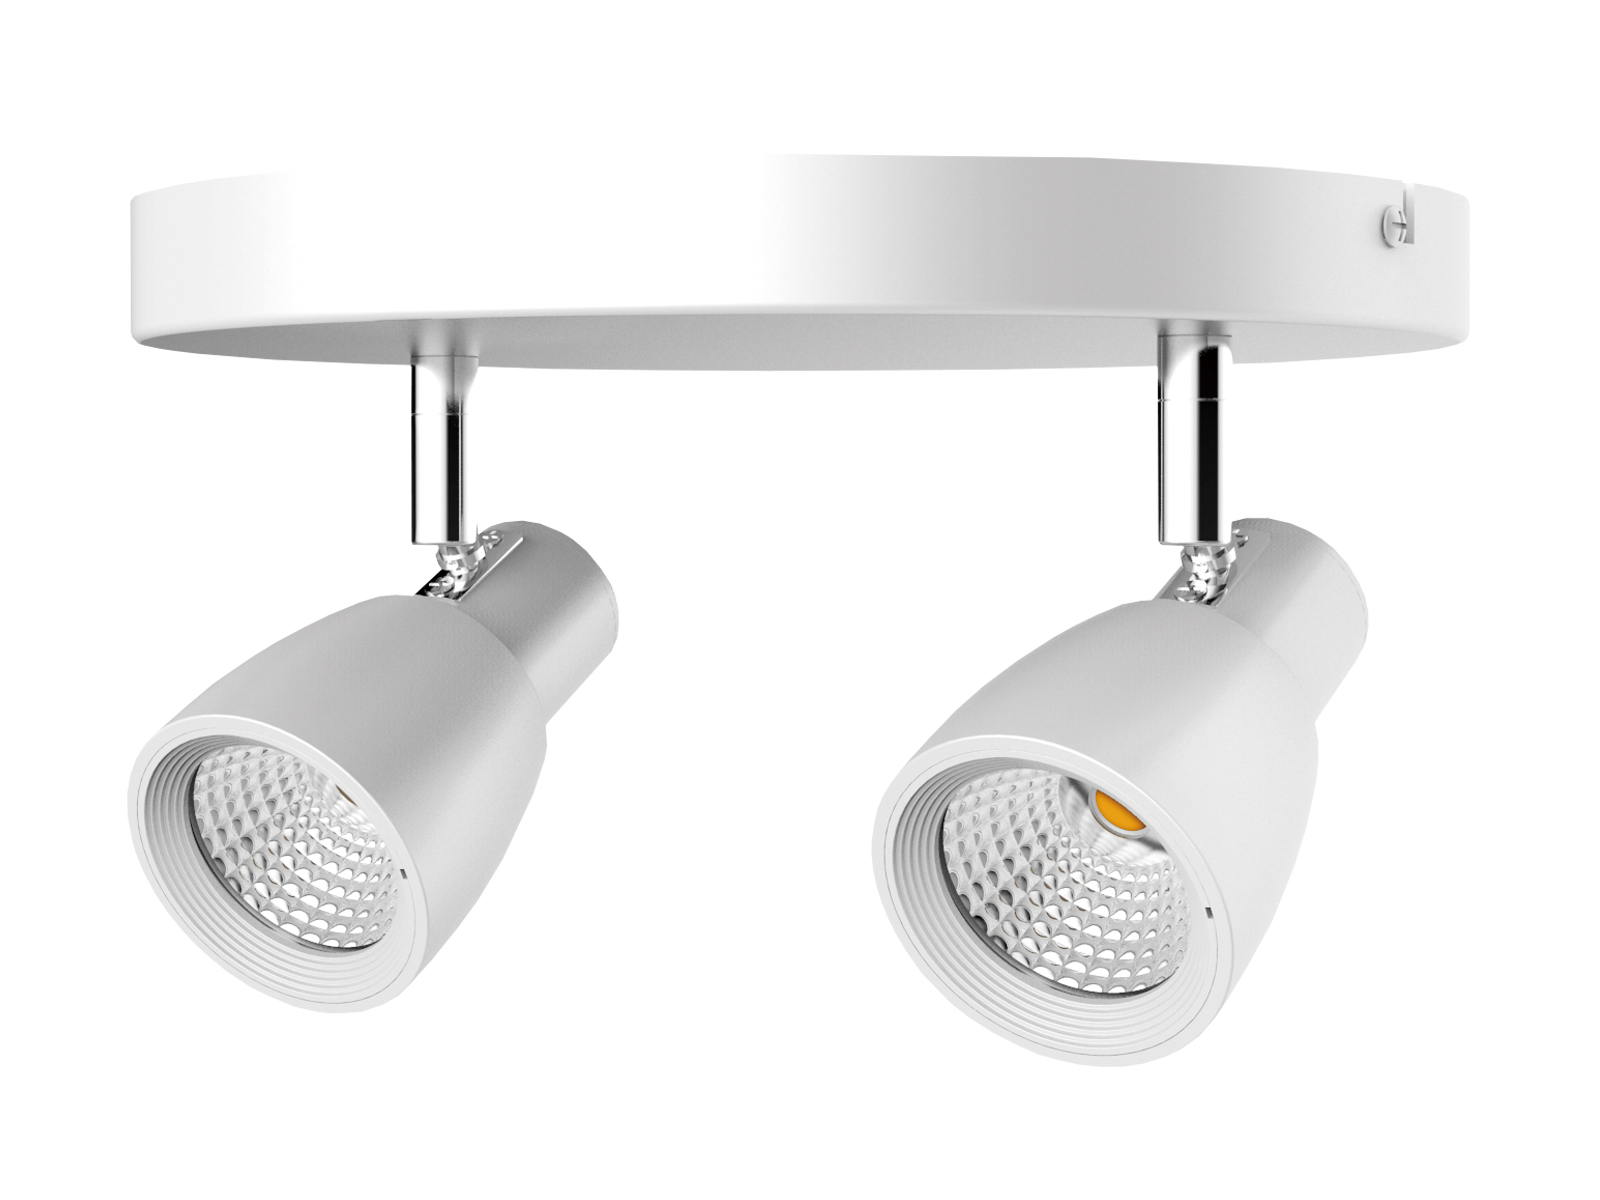 Adjustable Ceiling Spotlights Manufacture